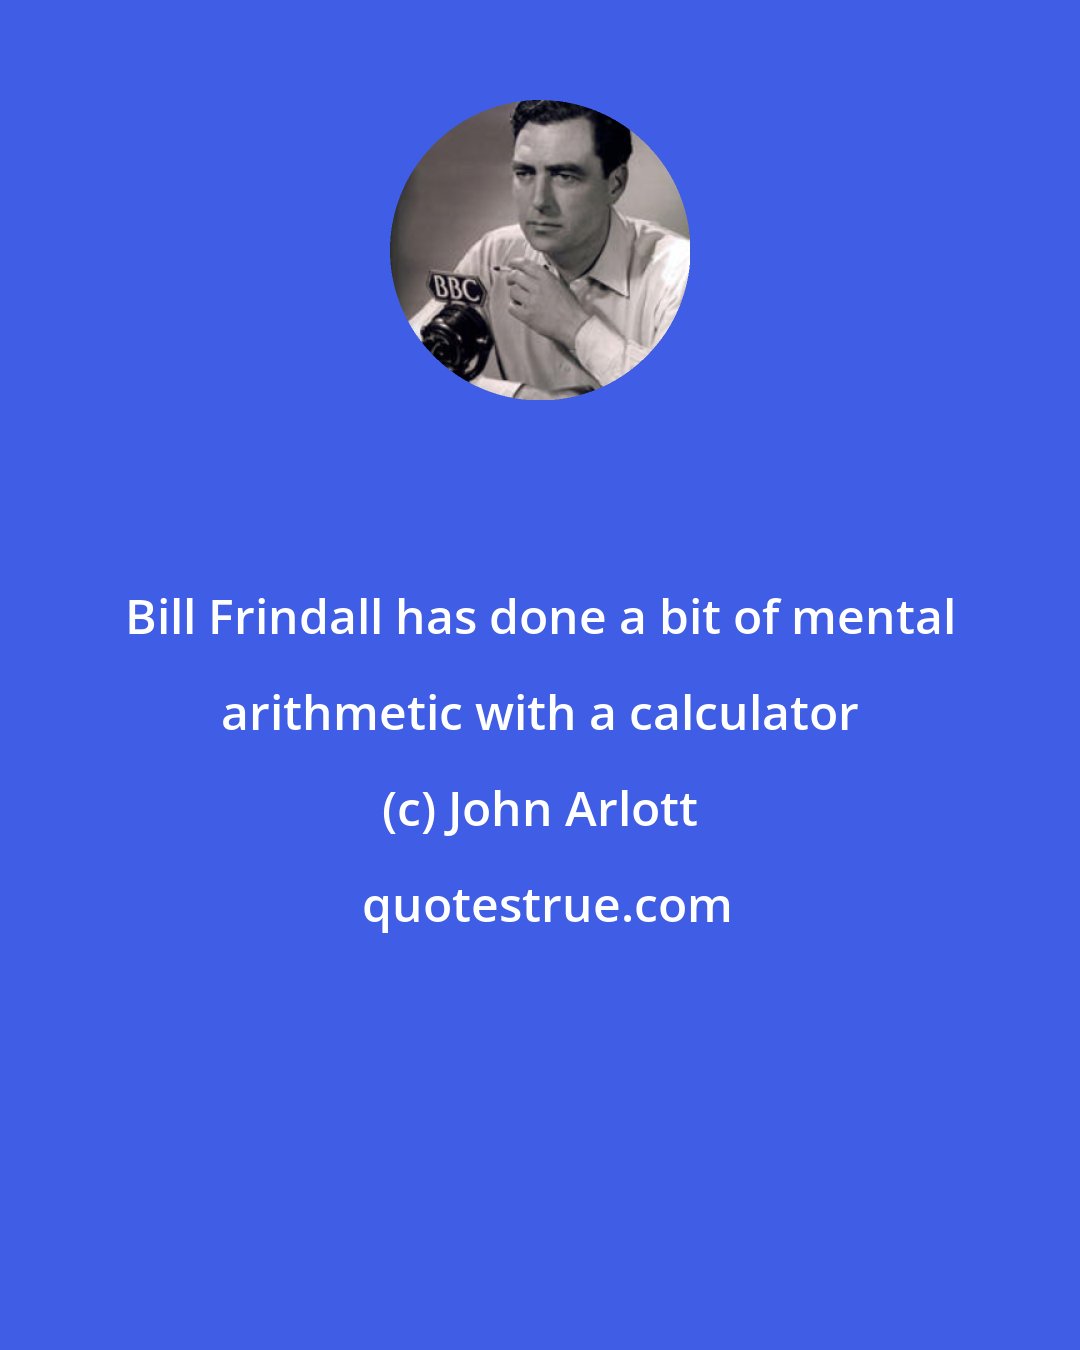 John Arlott: Bill Frindall has done a bit of mental arithmetic with a calculator